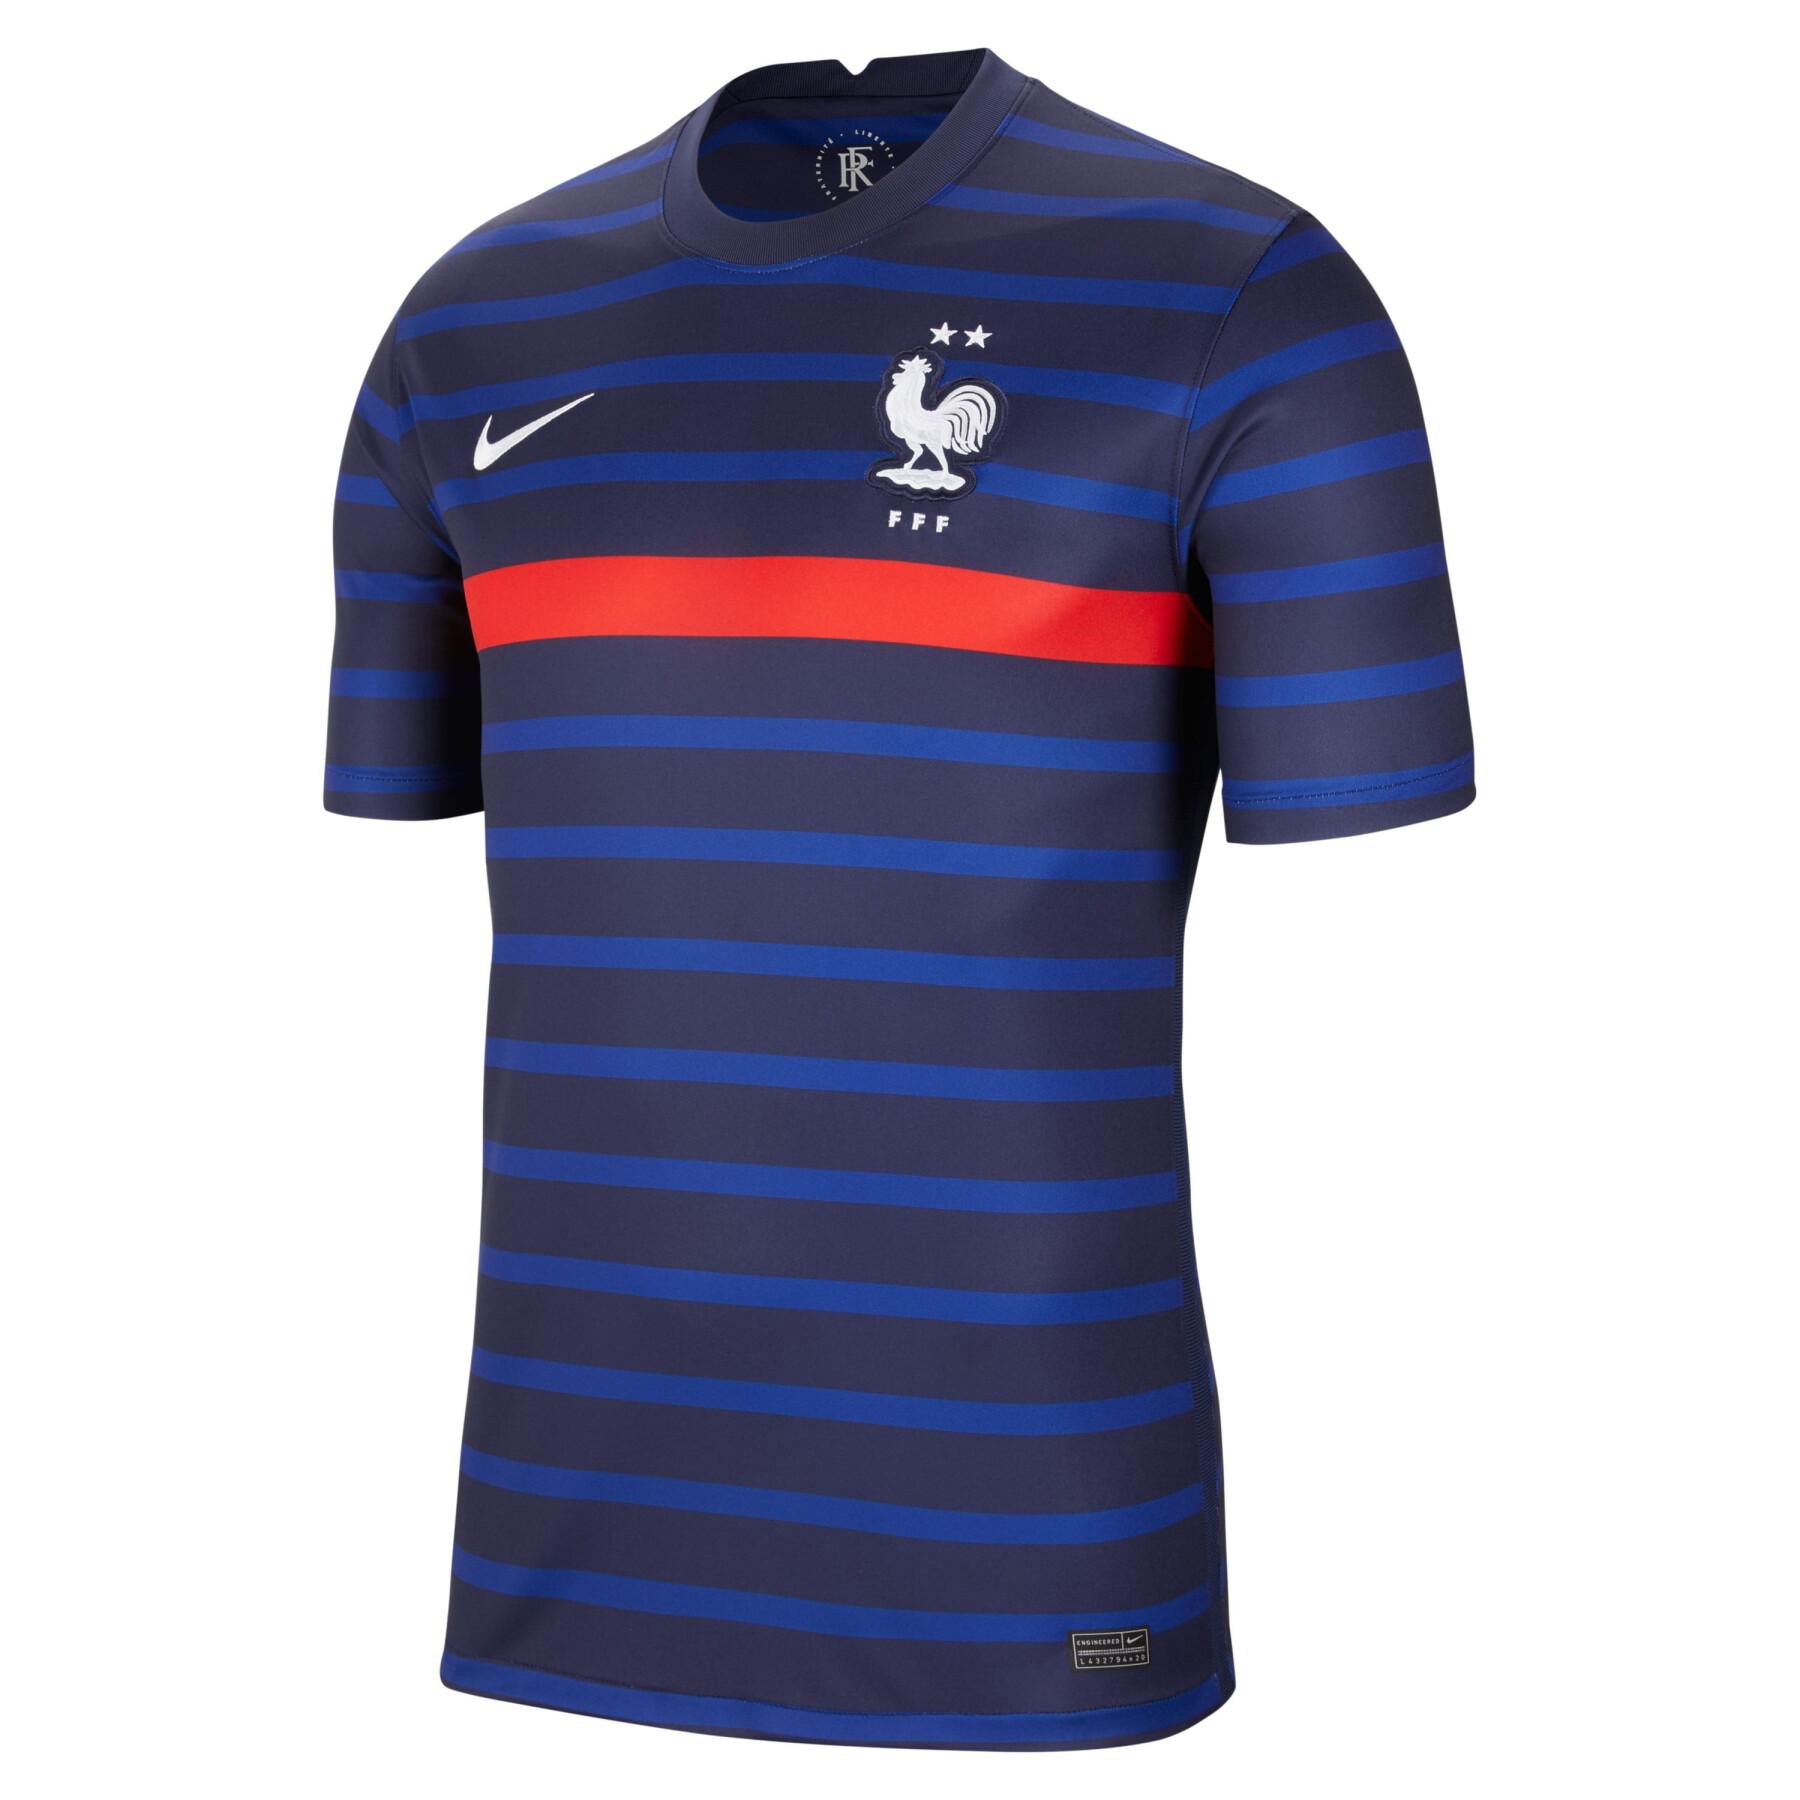 Camiseta primera equipación France 2020